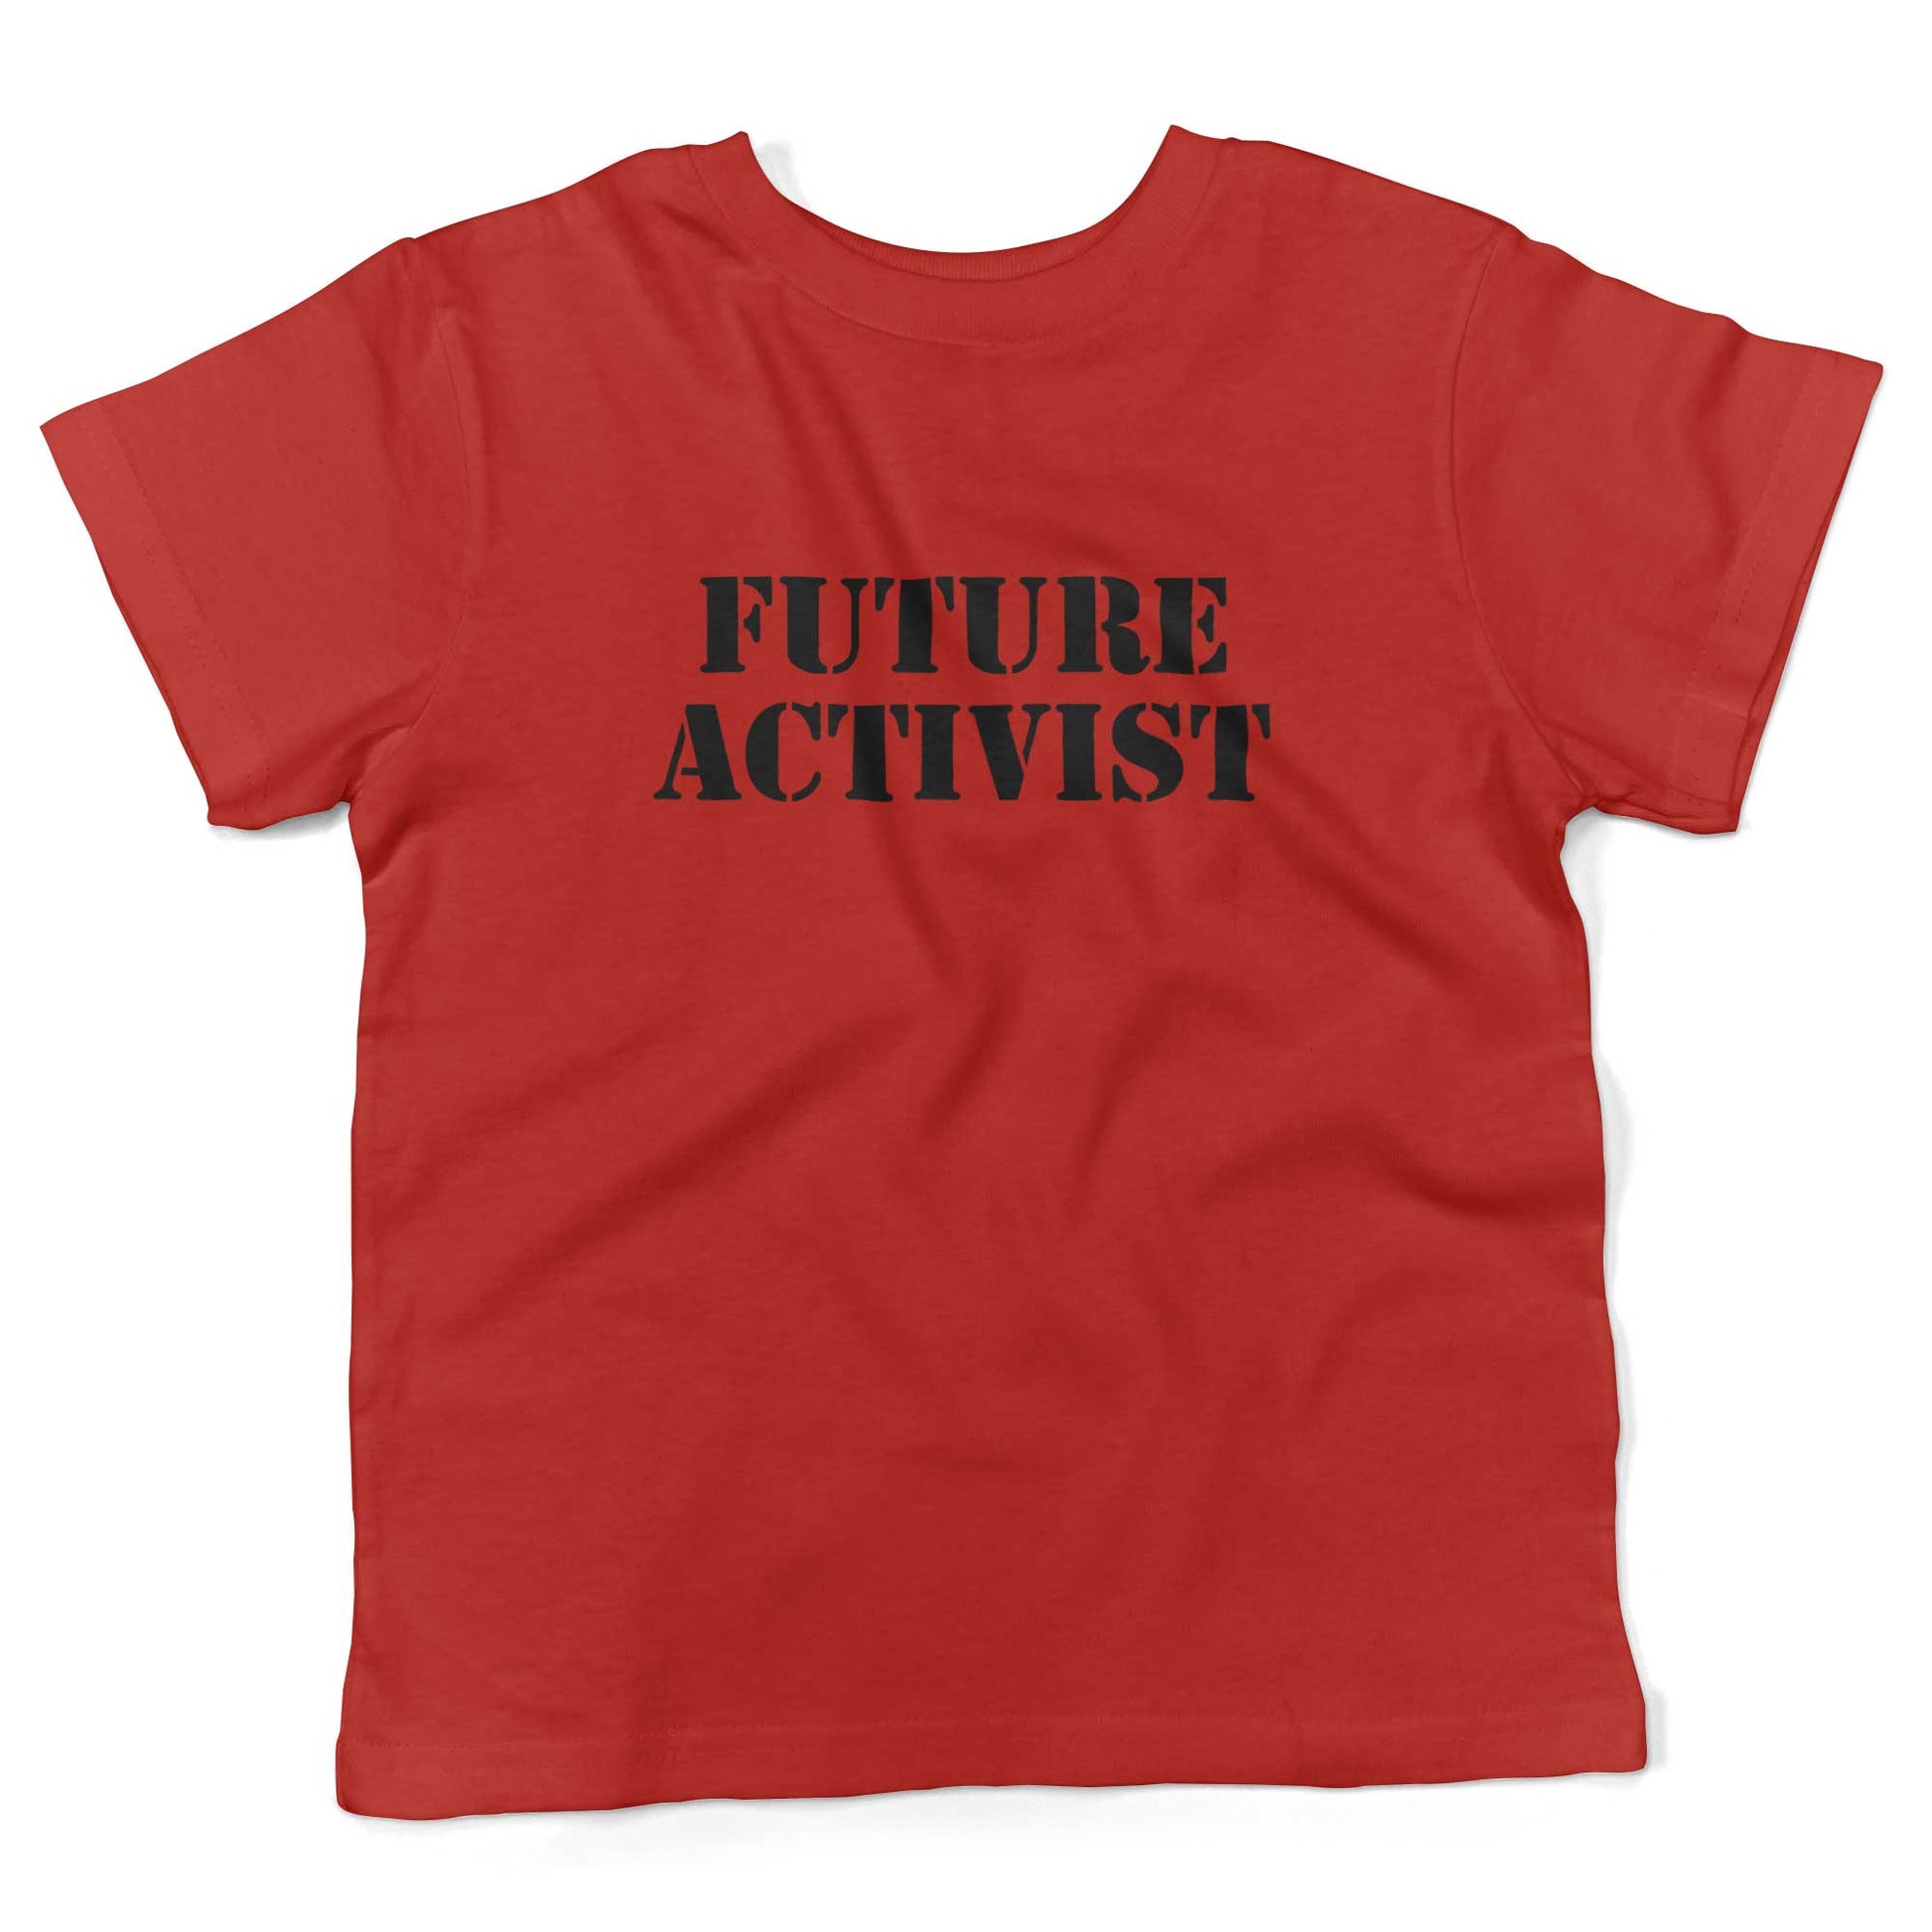 Future Activist Toddler Shirt-Red-2T